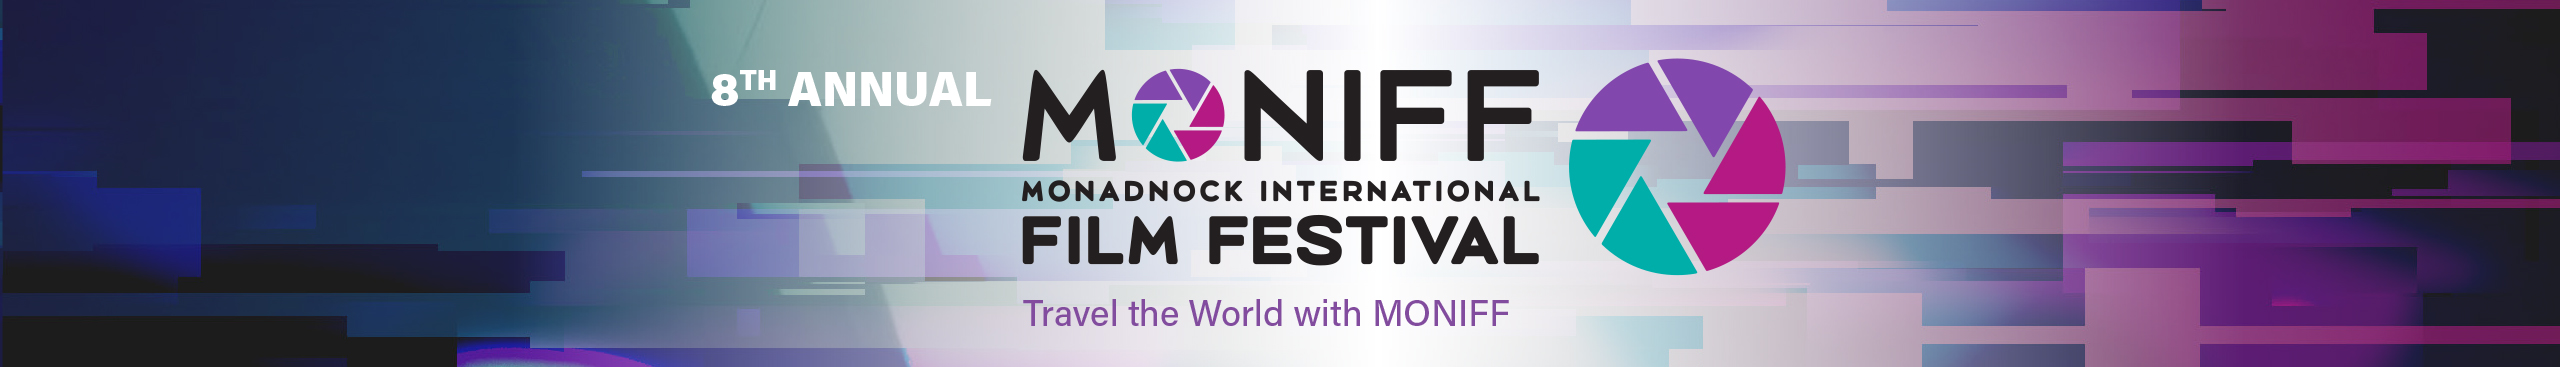 MONIFF 2020 Film Festival